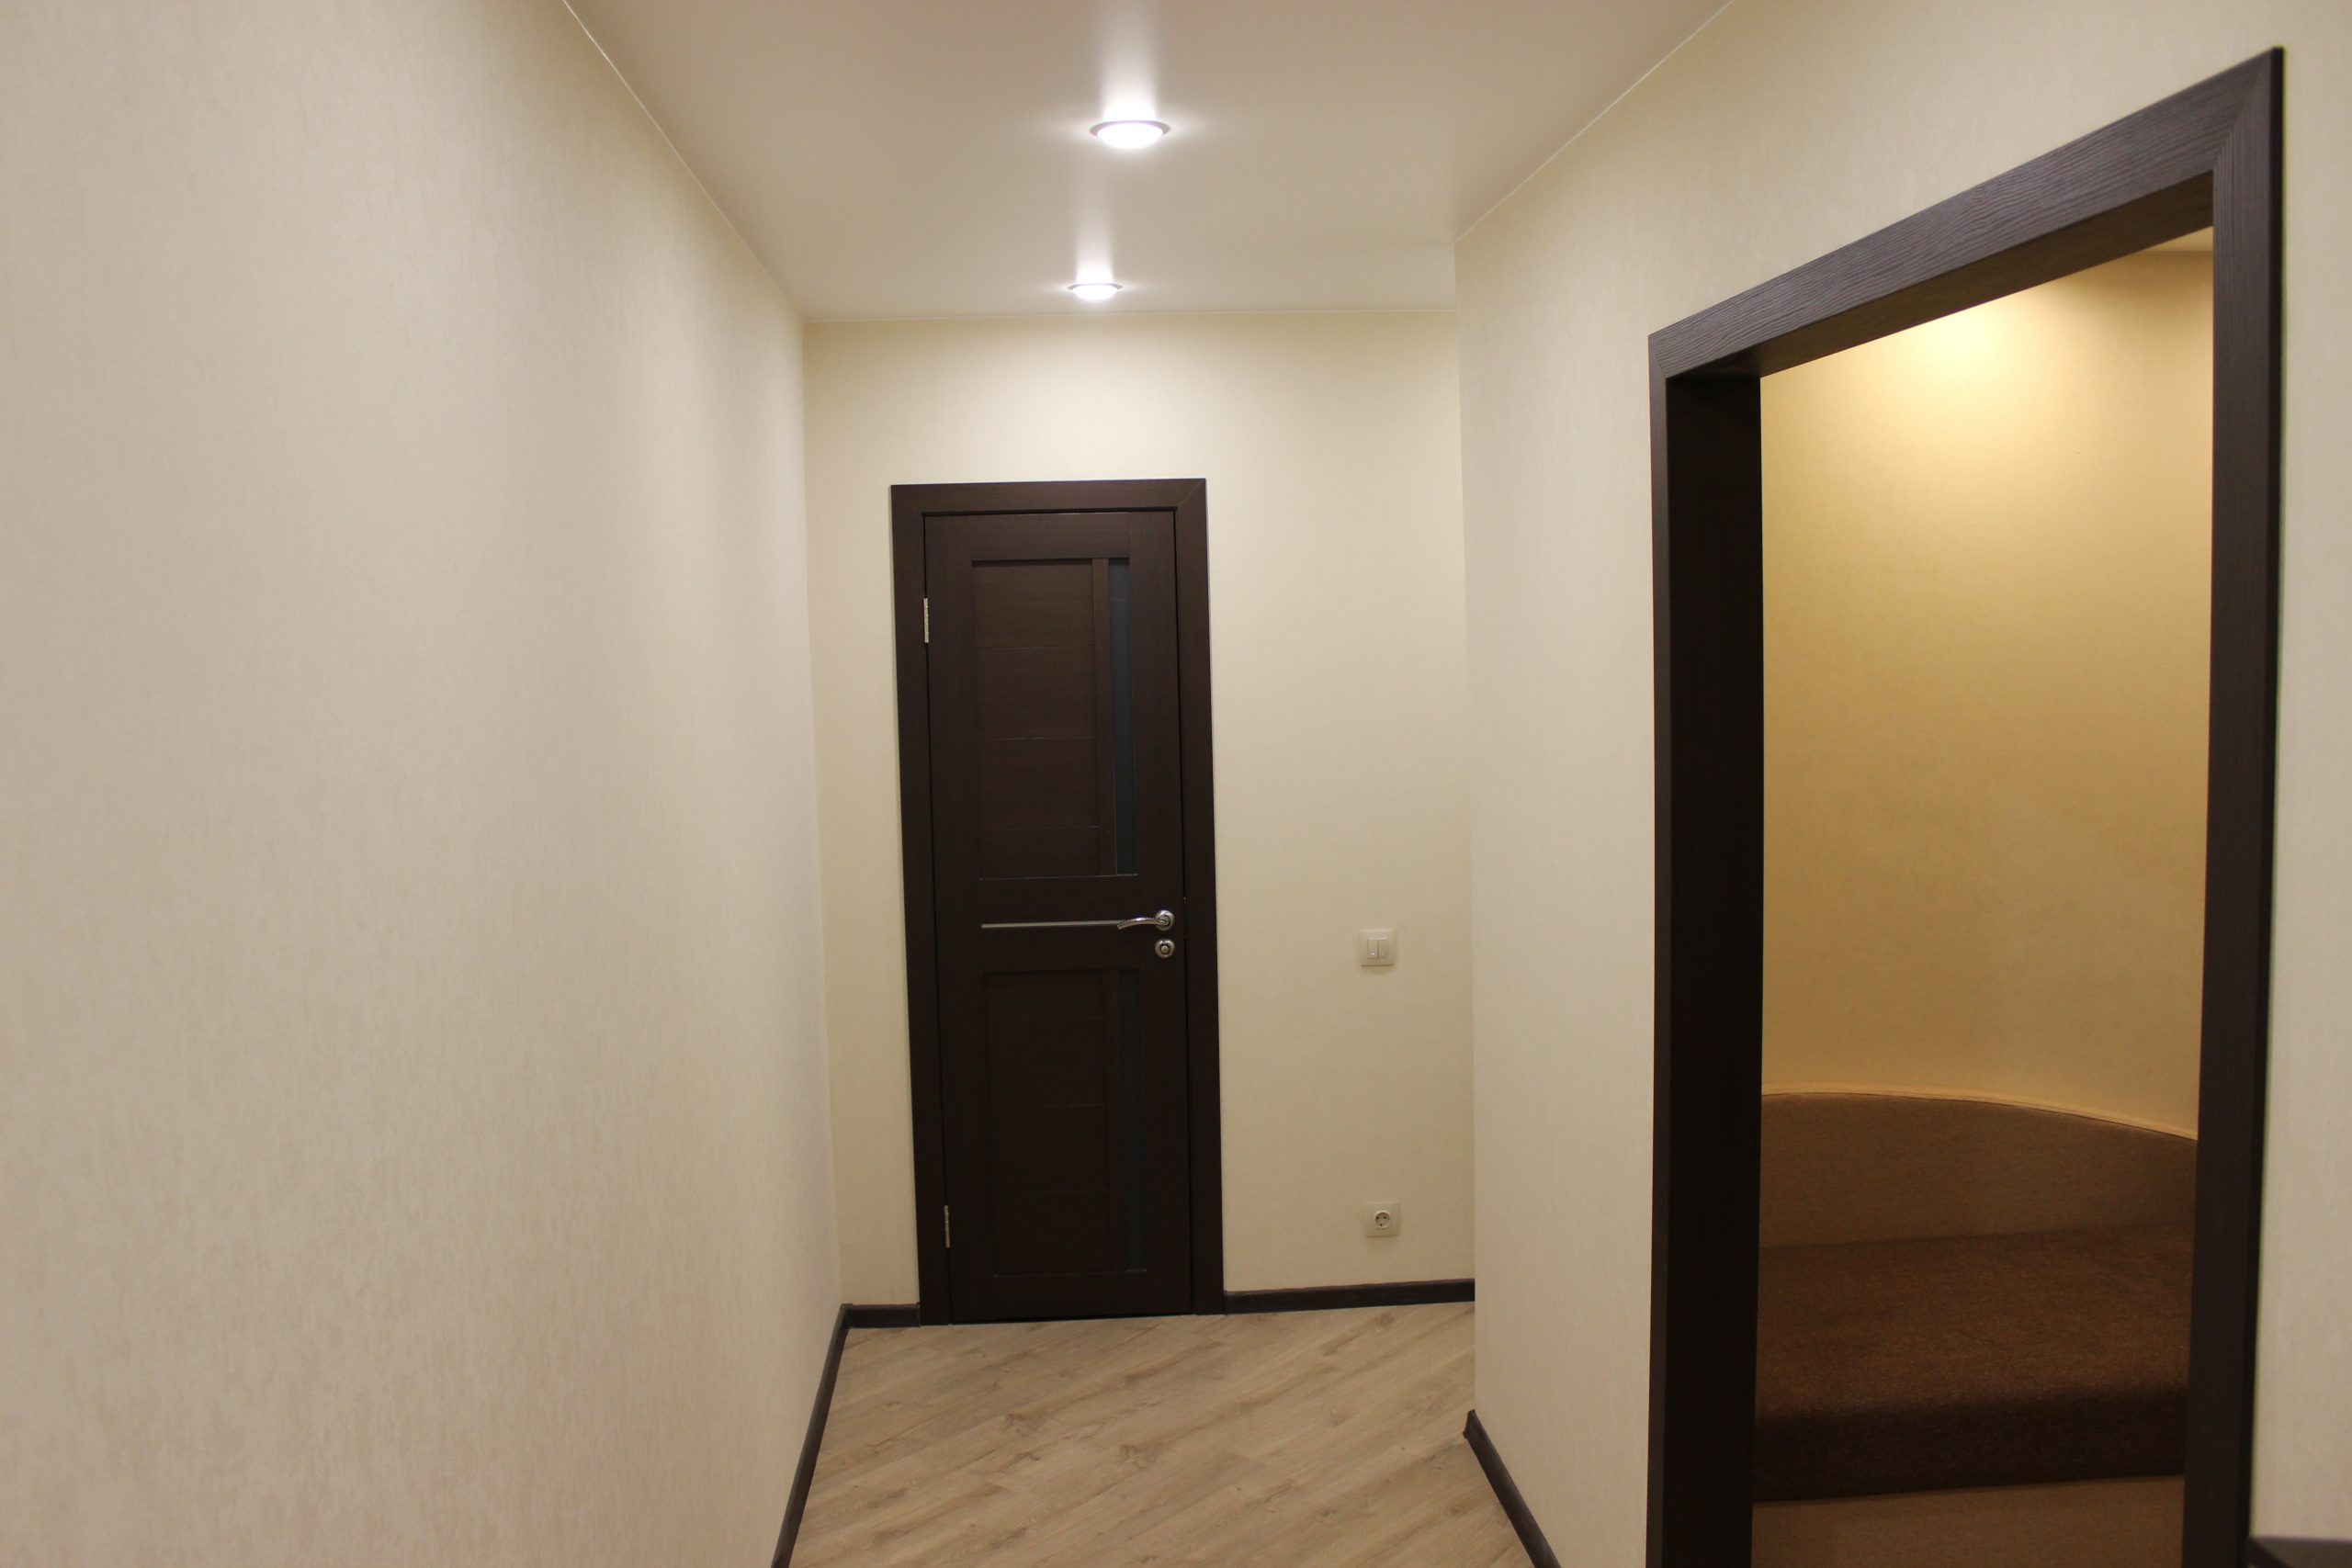 Однокомнатная квартира на ул. Косарева 33 (38кв.м) до 3 гостей